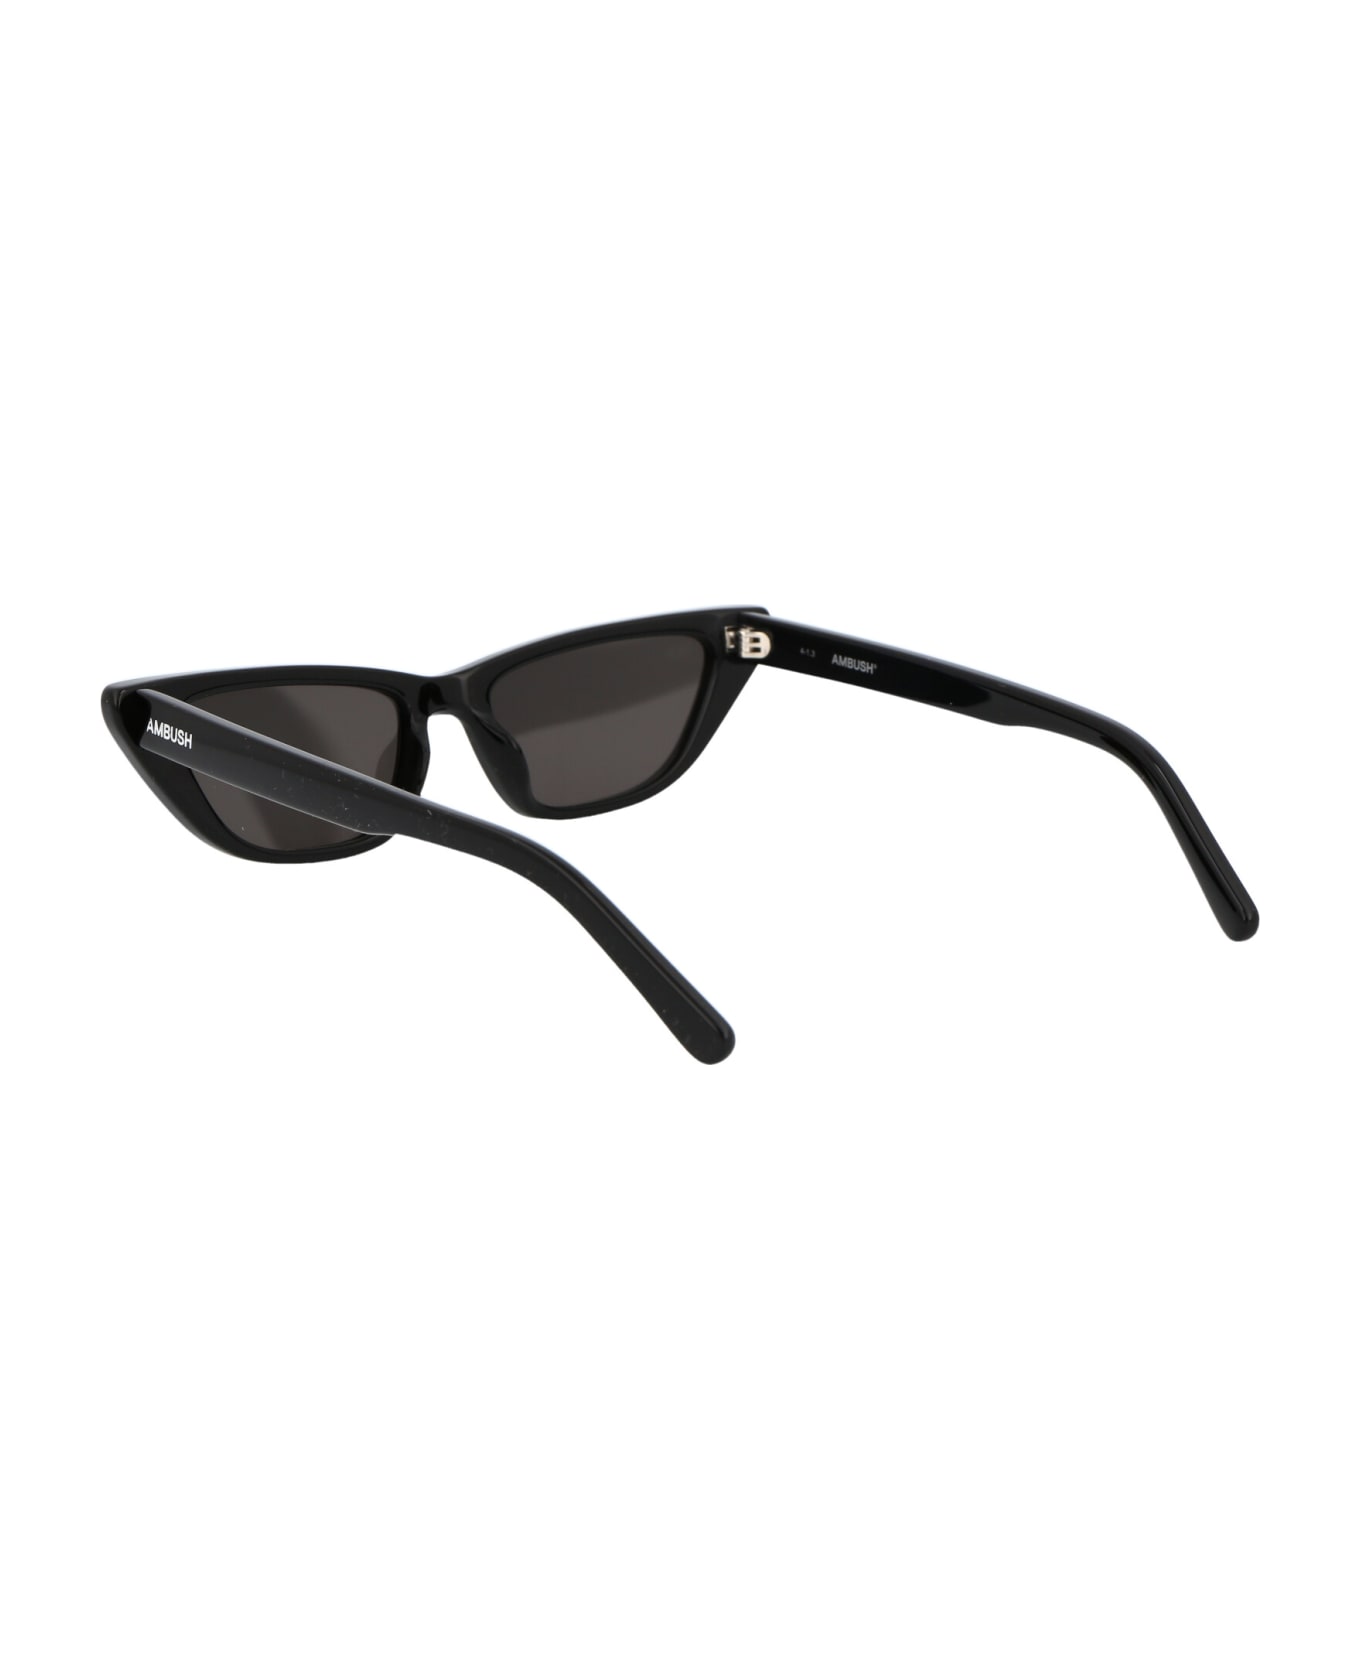 AMBUSH Molly Sunglasses - 1007 BLACK DARK GREY